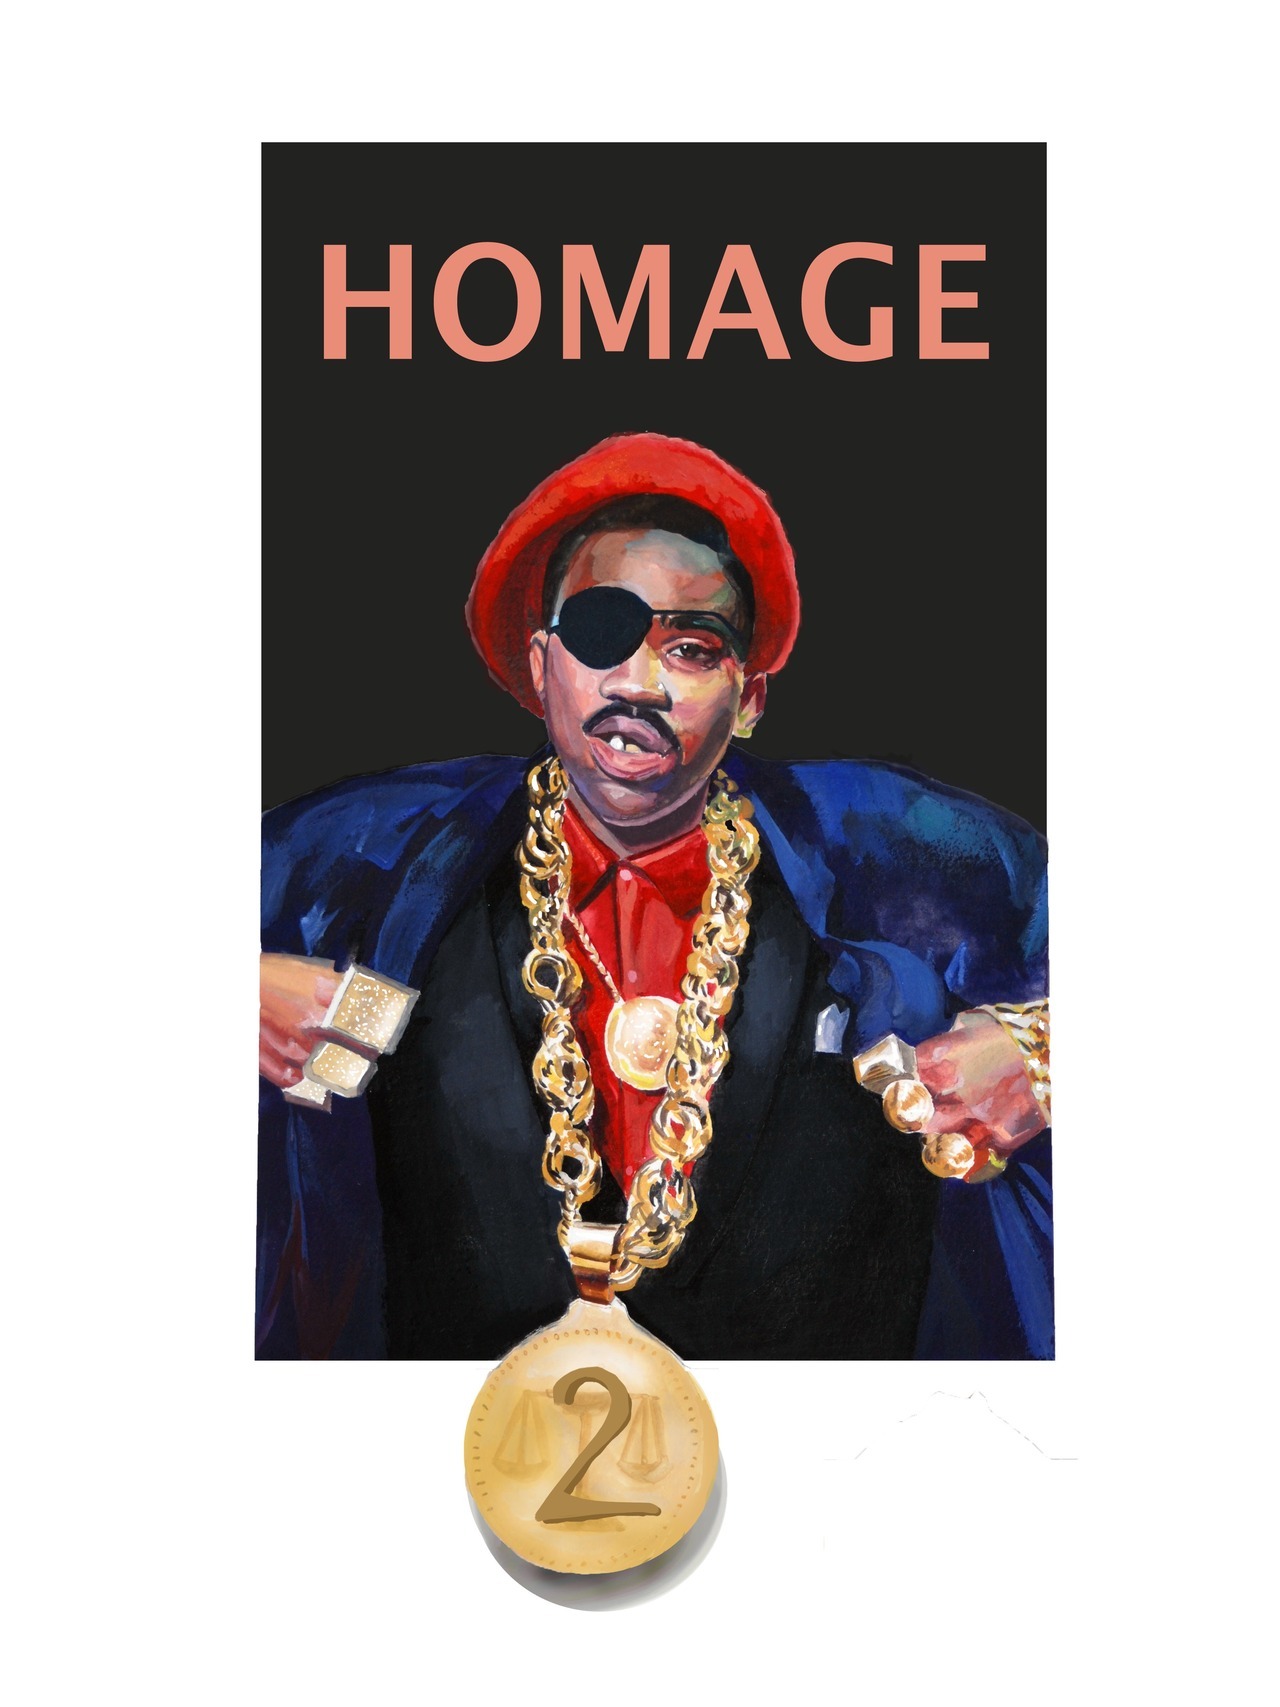 Commission Slick Rick homage piece #art #fashion #hiphop #gold